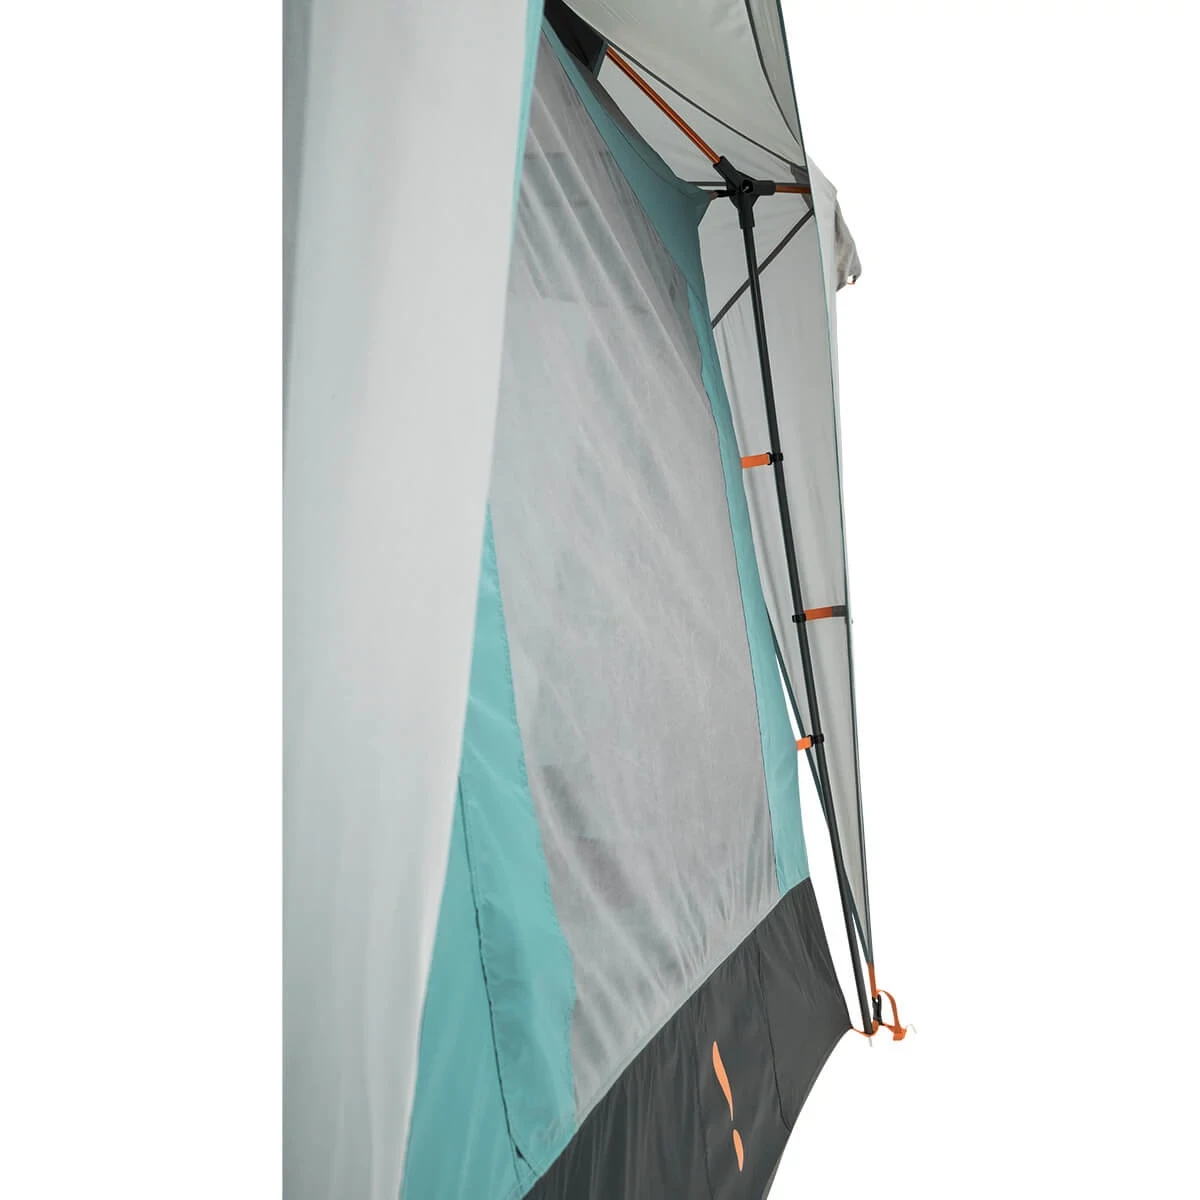 Jade Canyon X6 tent vertical wall